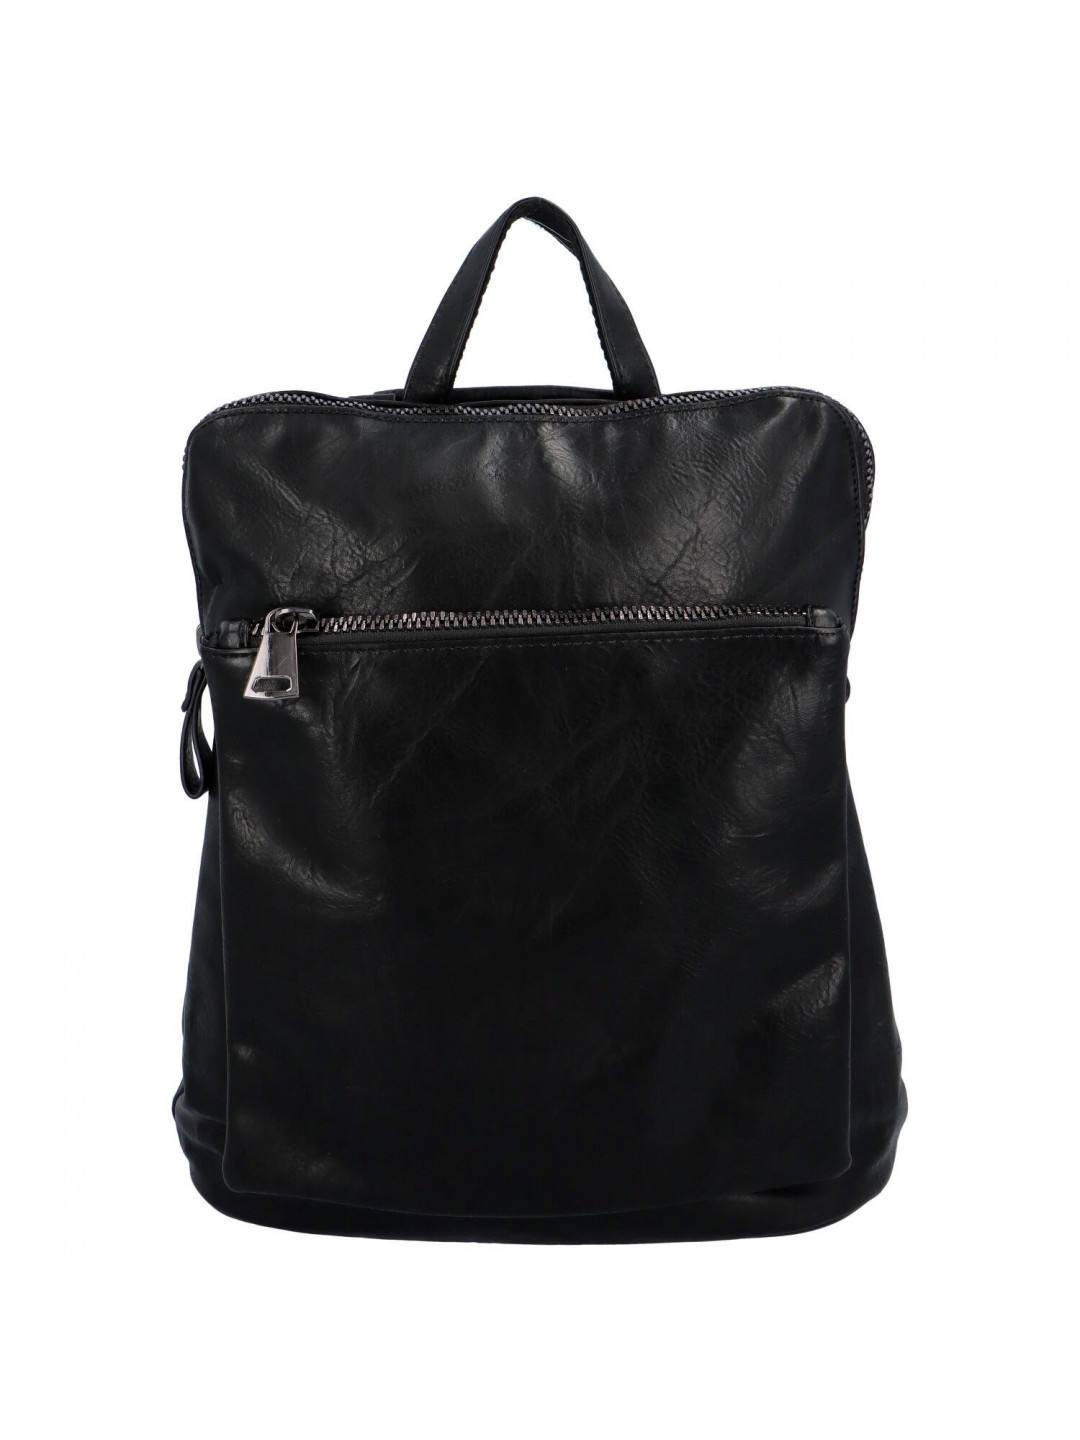 Praktický dámský koženkový kabelko batůžek Reyes černá